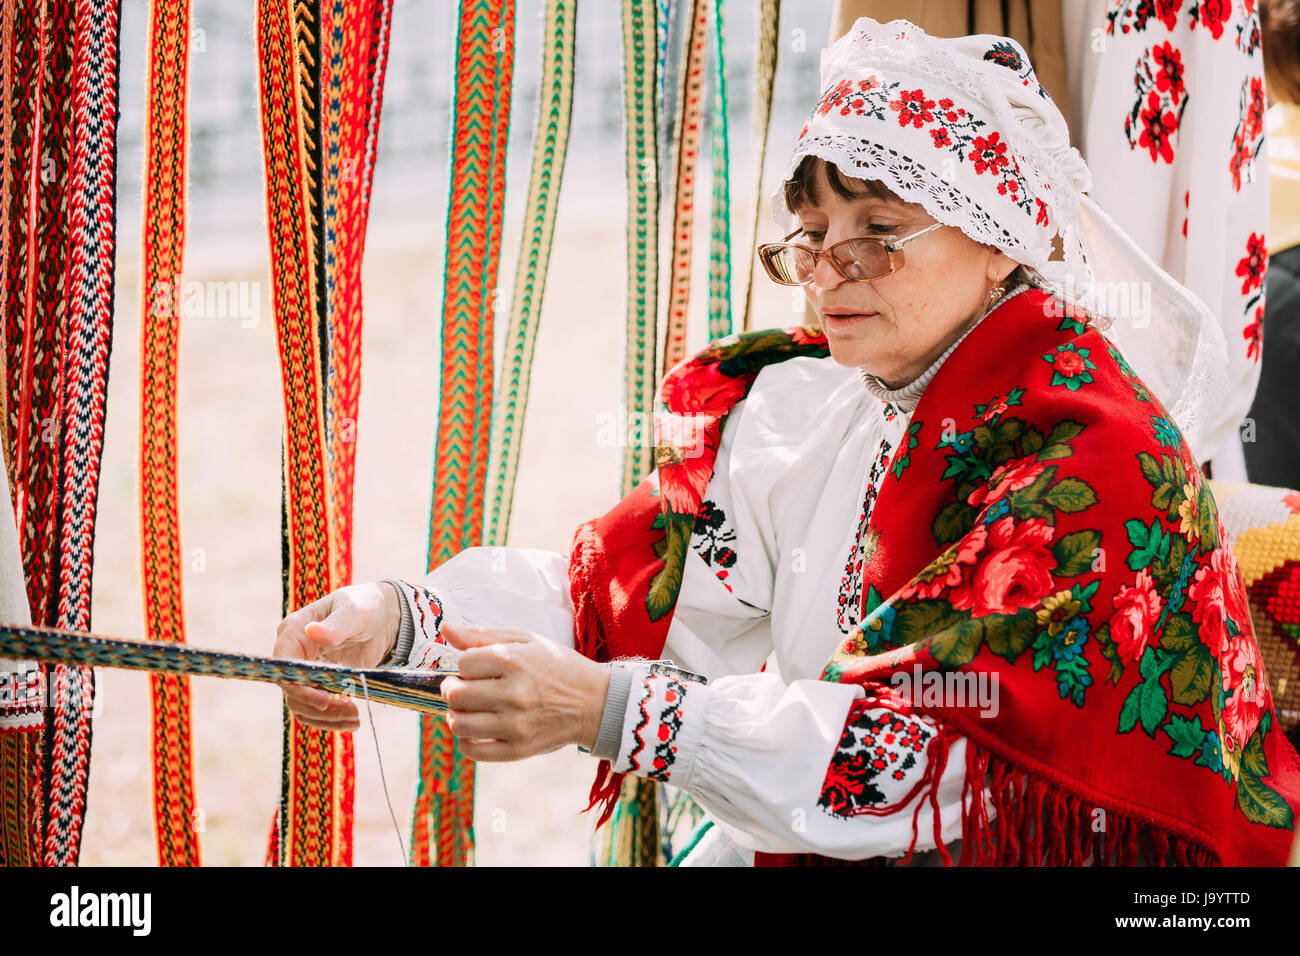 Gomel, Belarus - September 12, 2015: Woman in national Belarusian folk costume weaving belt Stock Photo